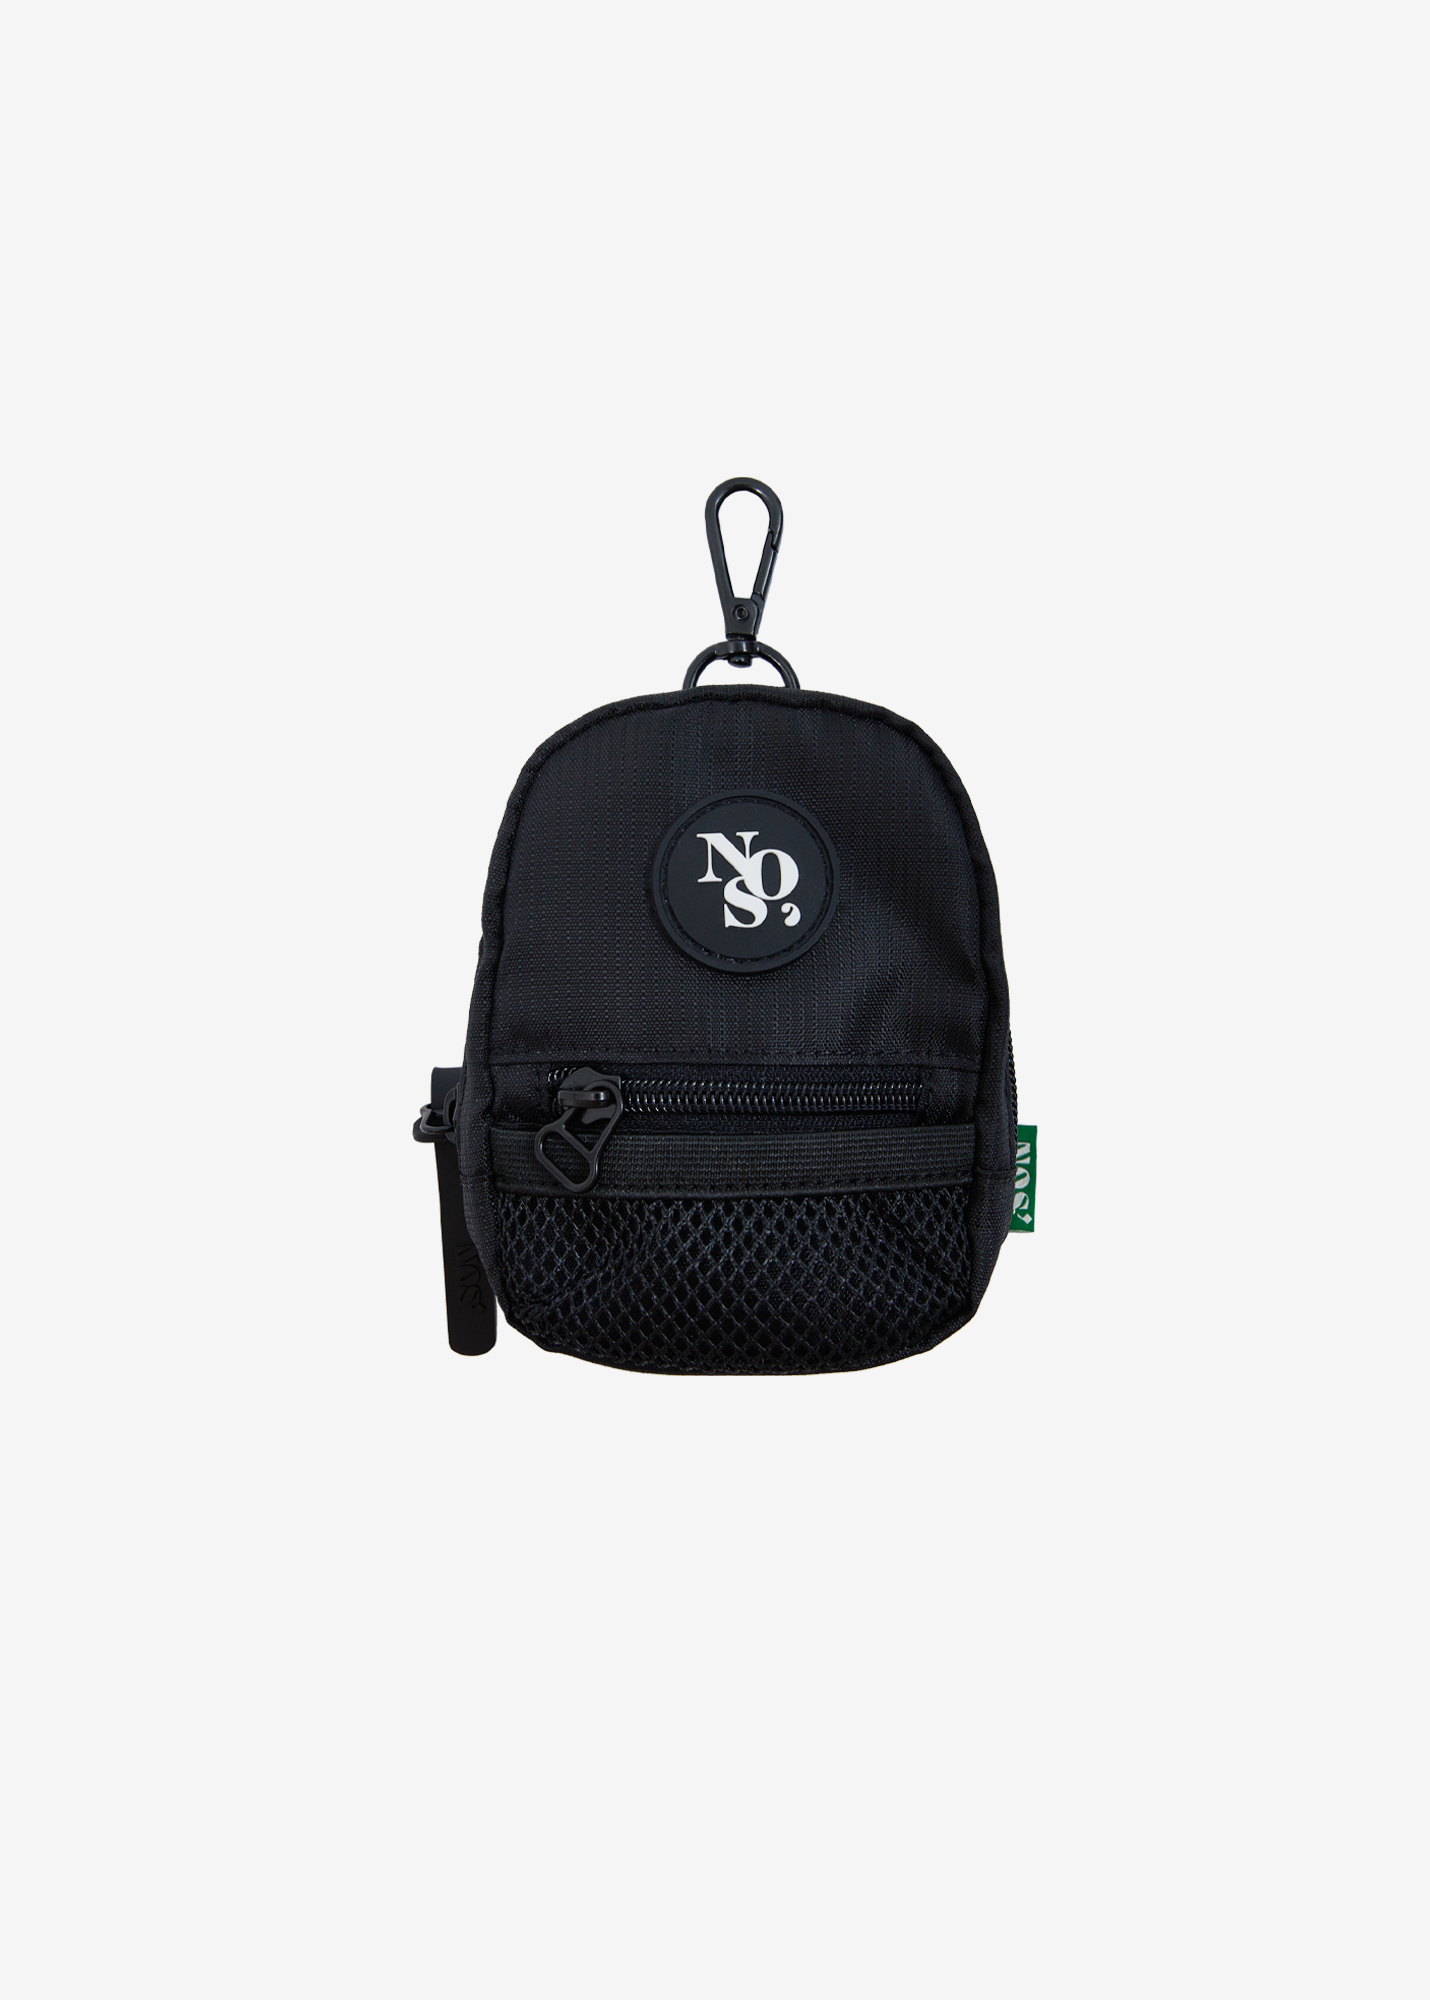 NOS7 Key ring pouch bag - Black